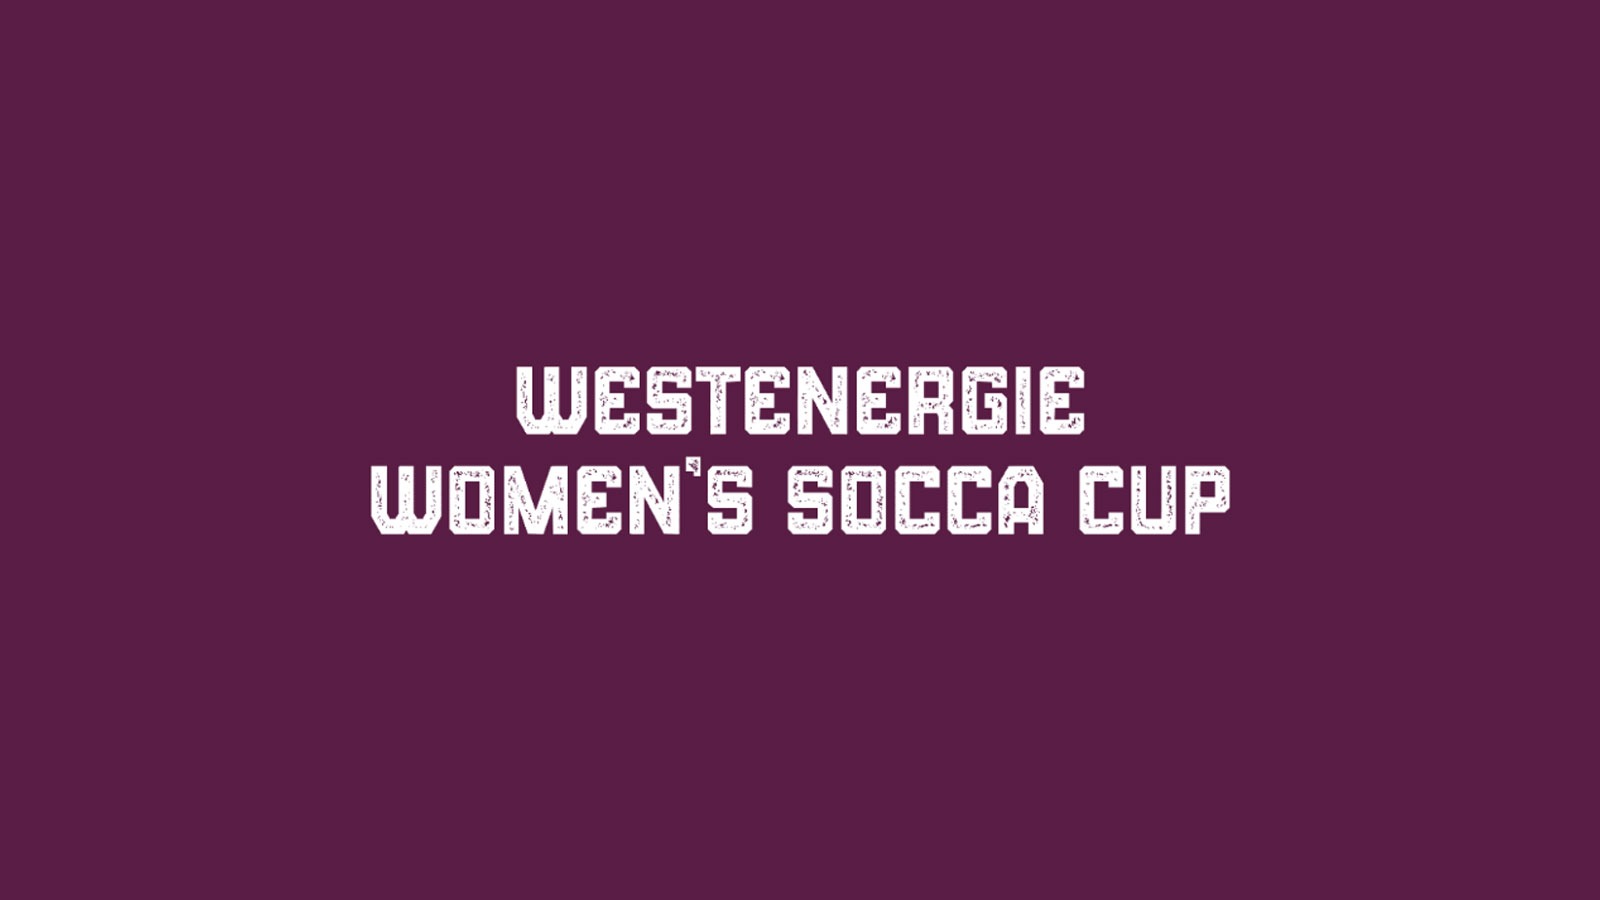 Westenergie women's socca cup (© SGS Essen / Westenergie)